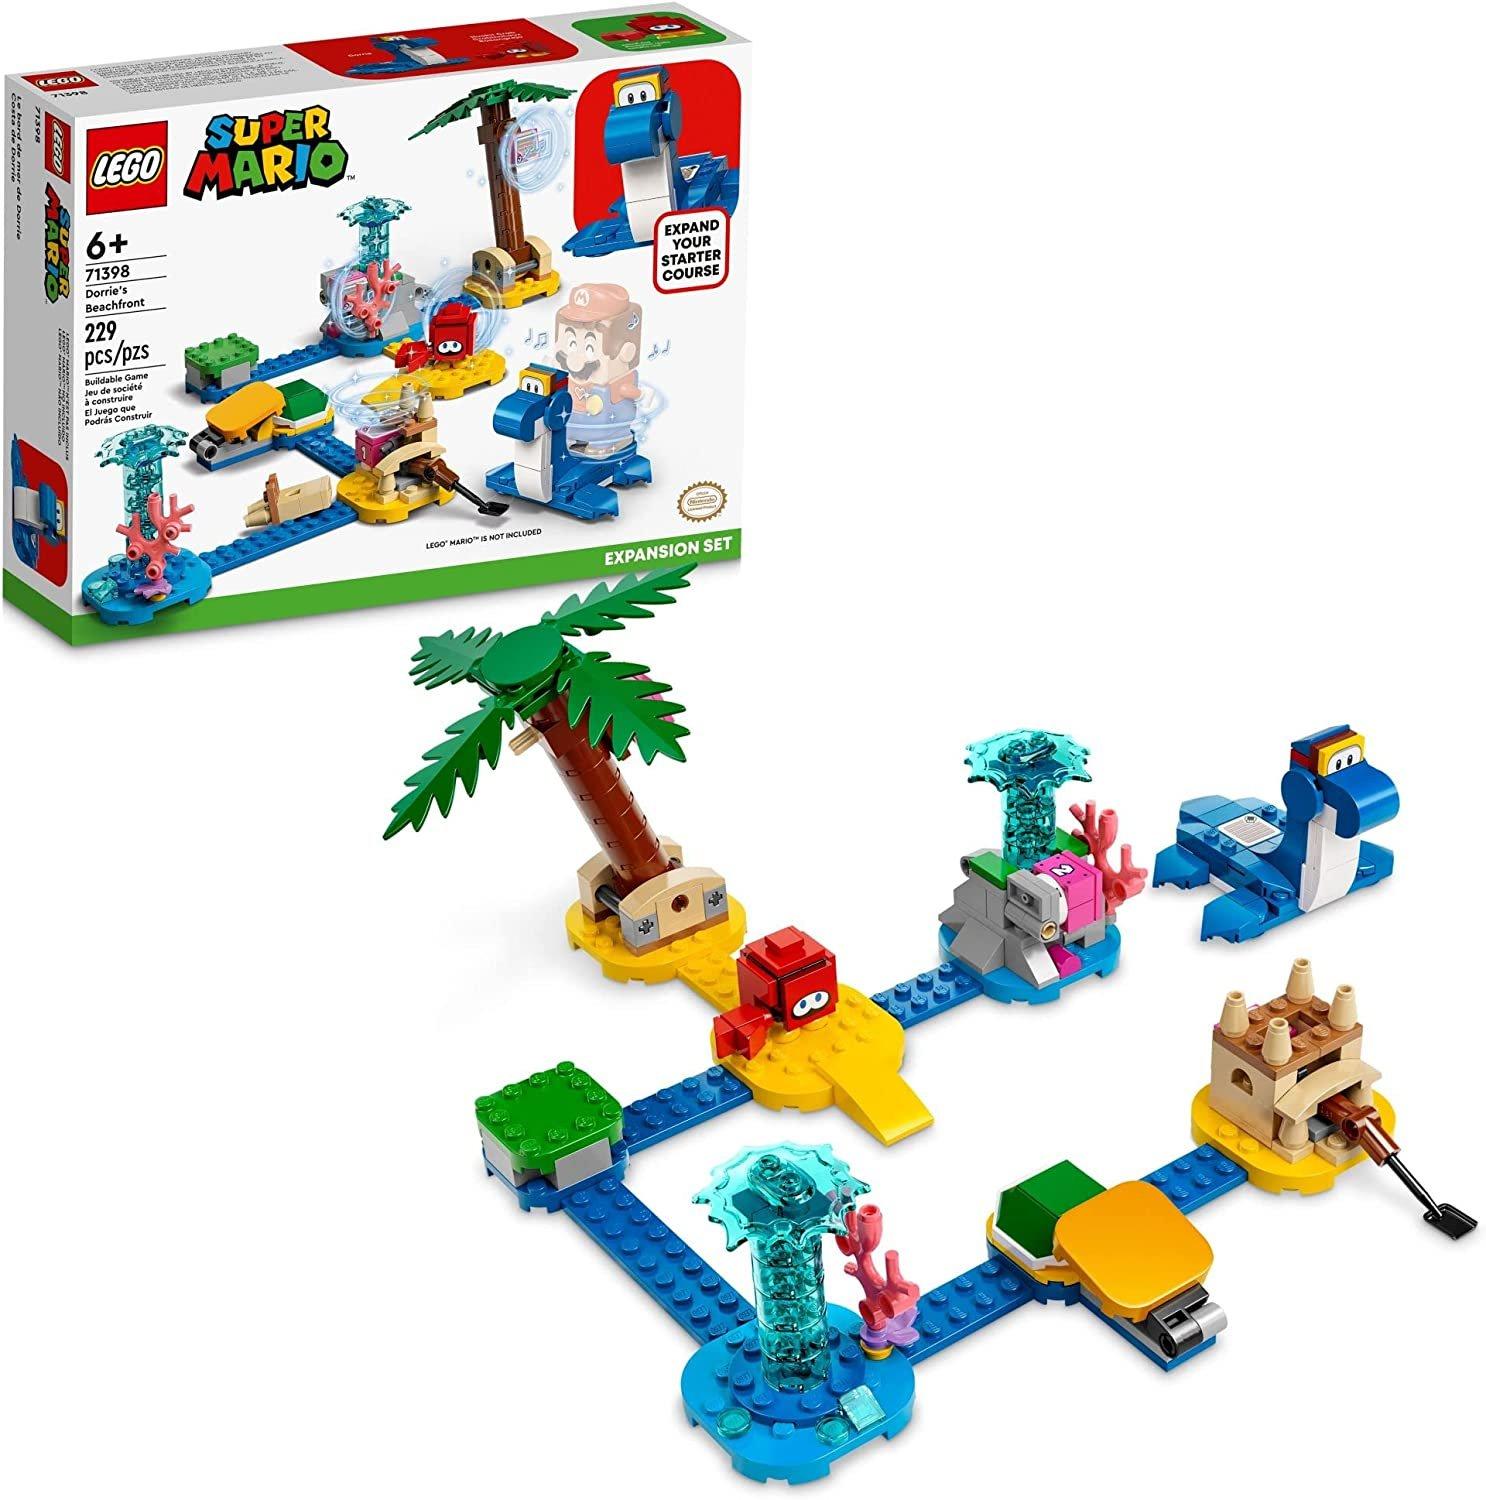 LEGO Super Mario Dorrie's Beachfront Expansion Set 71398